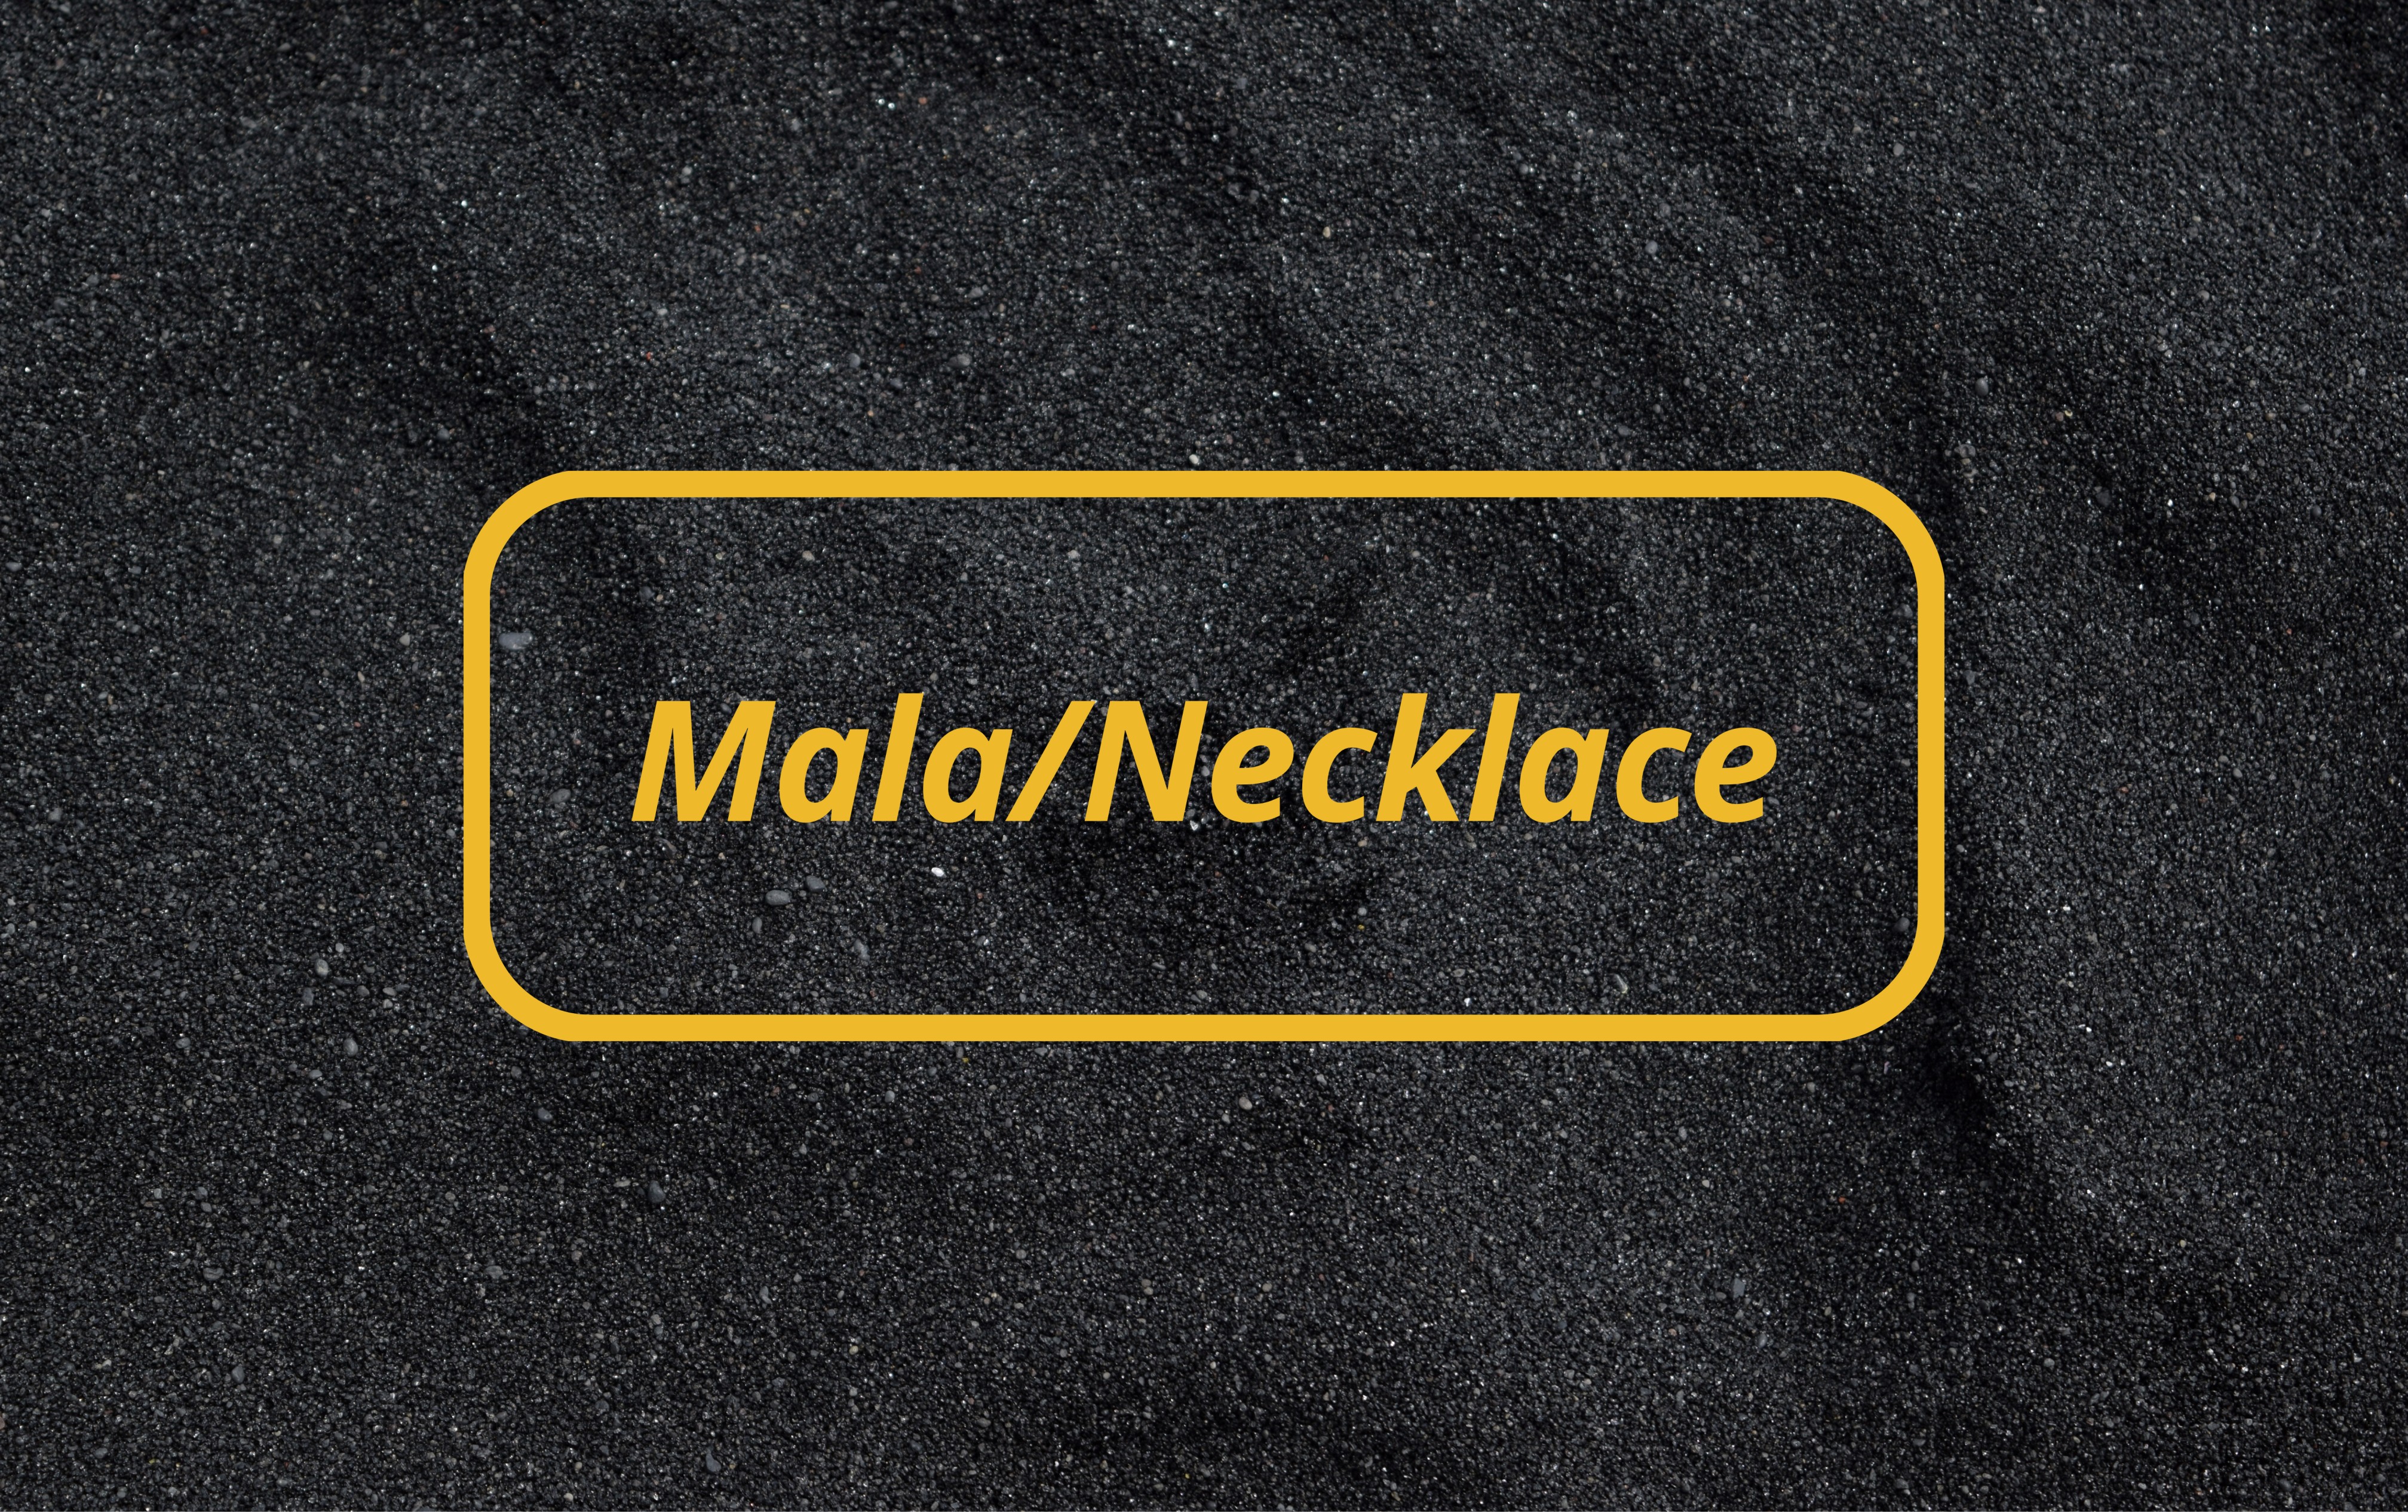 Mala/Necklace